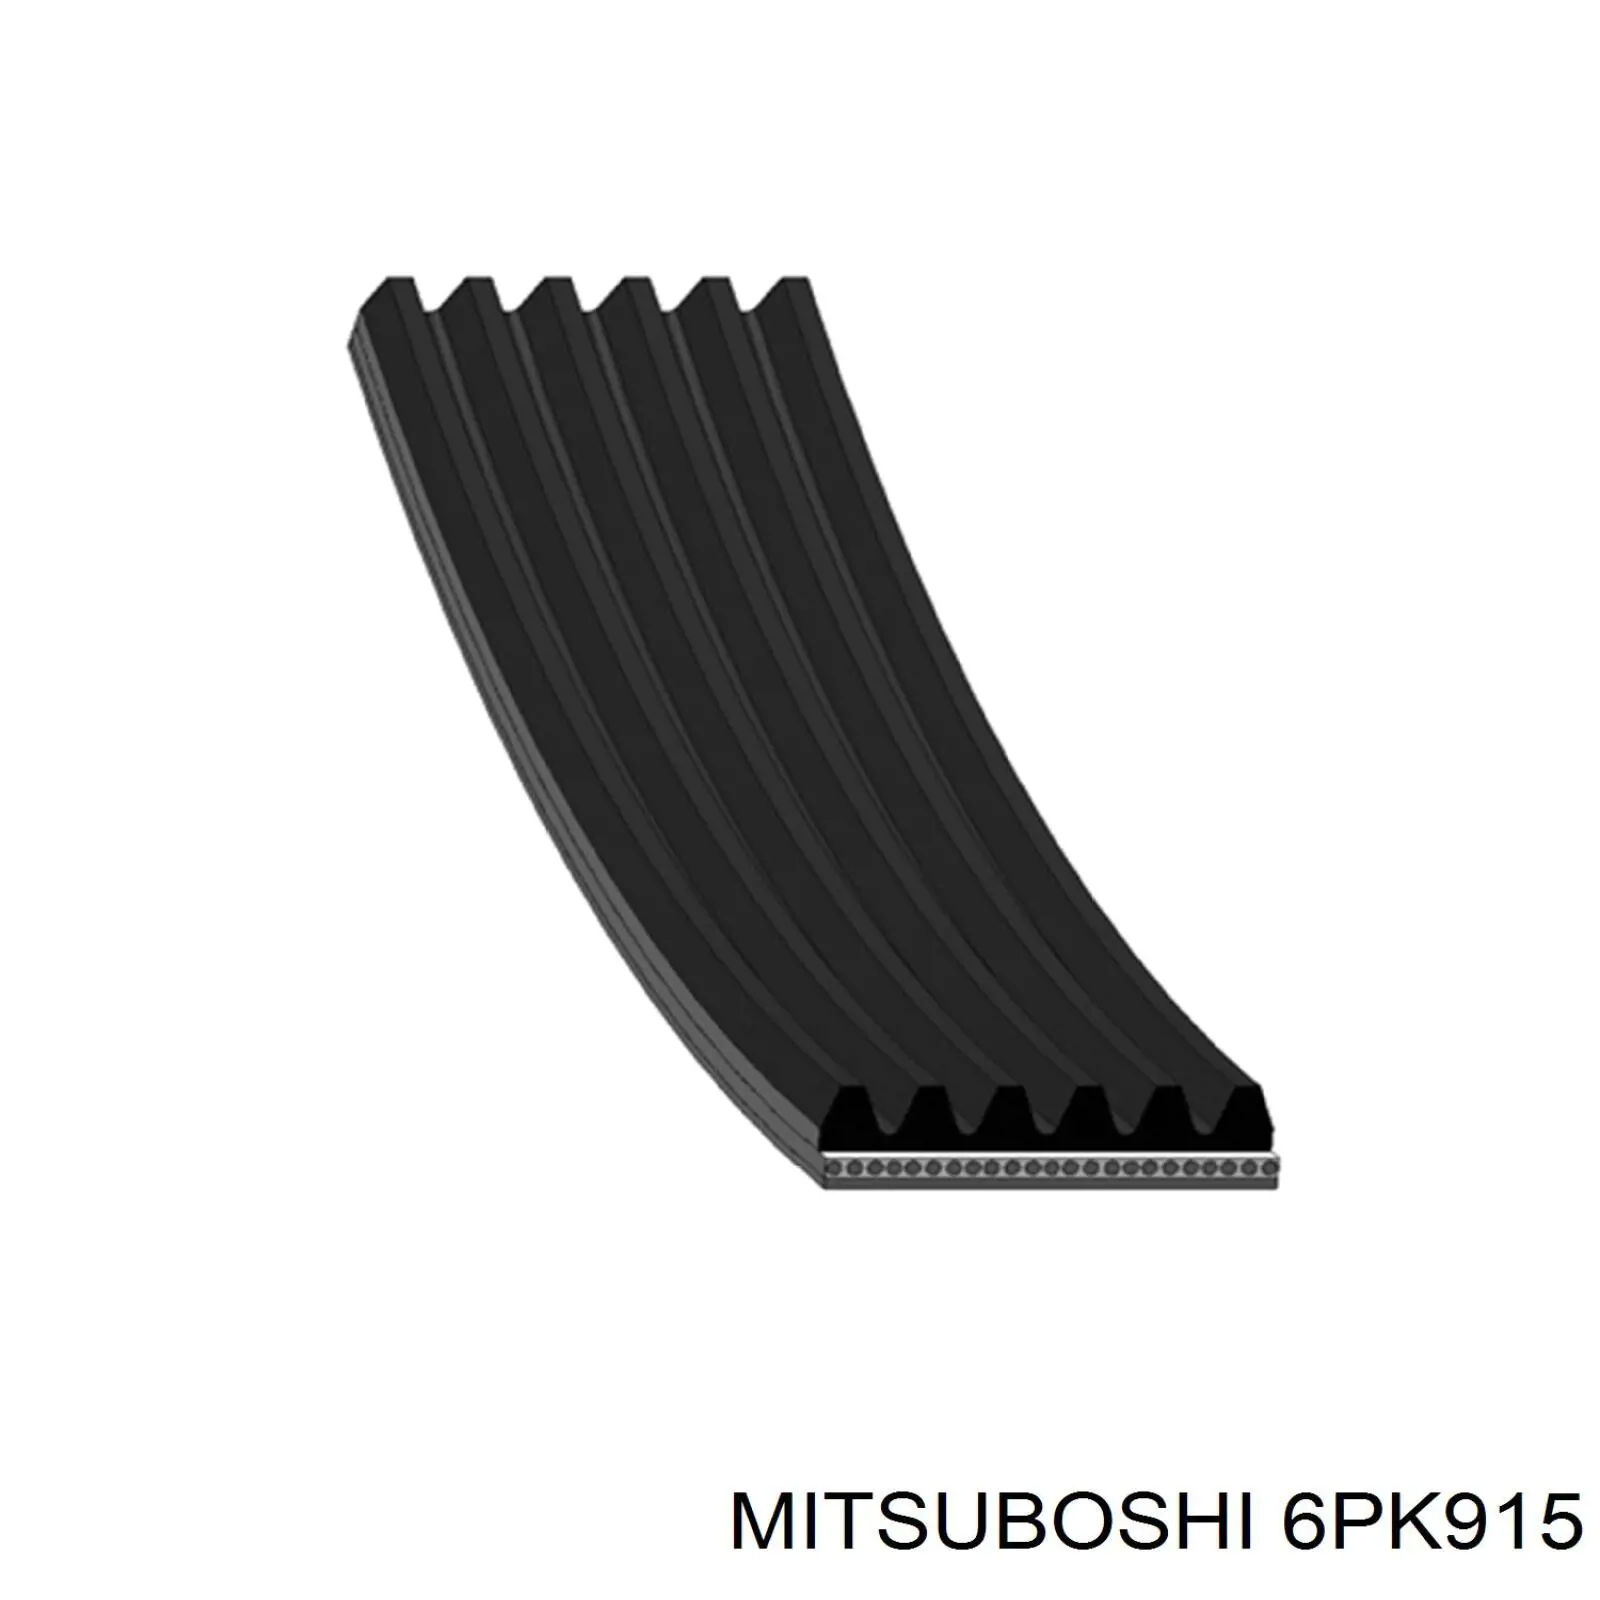 6PK915 Mitsuboshi ремень генератора